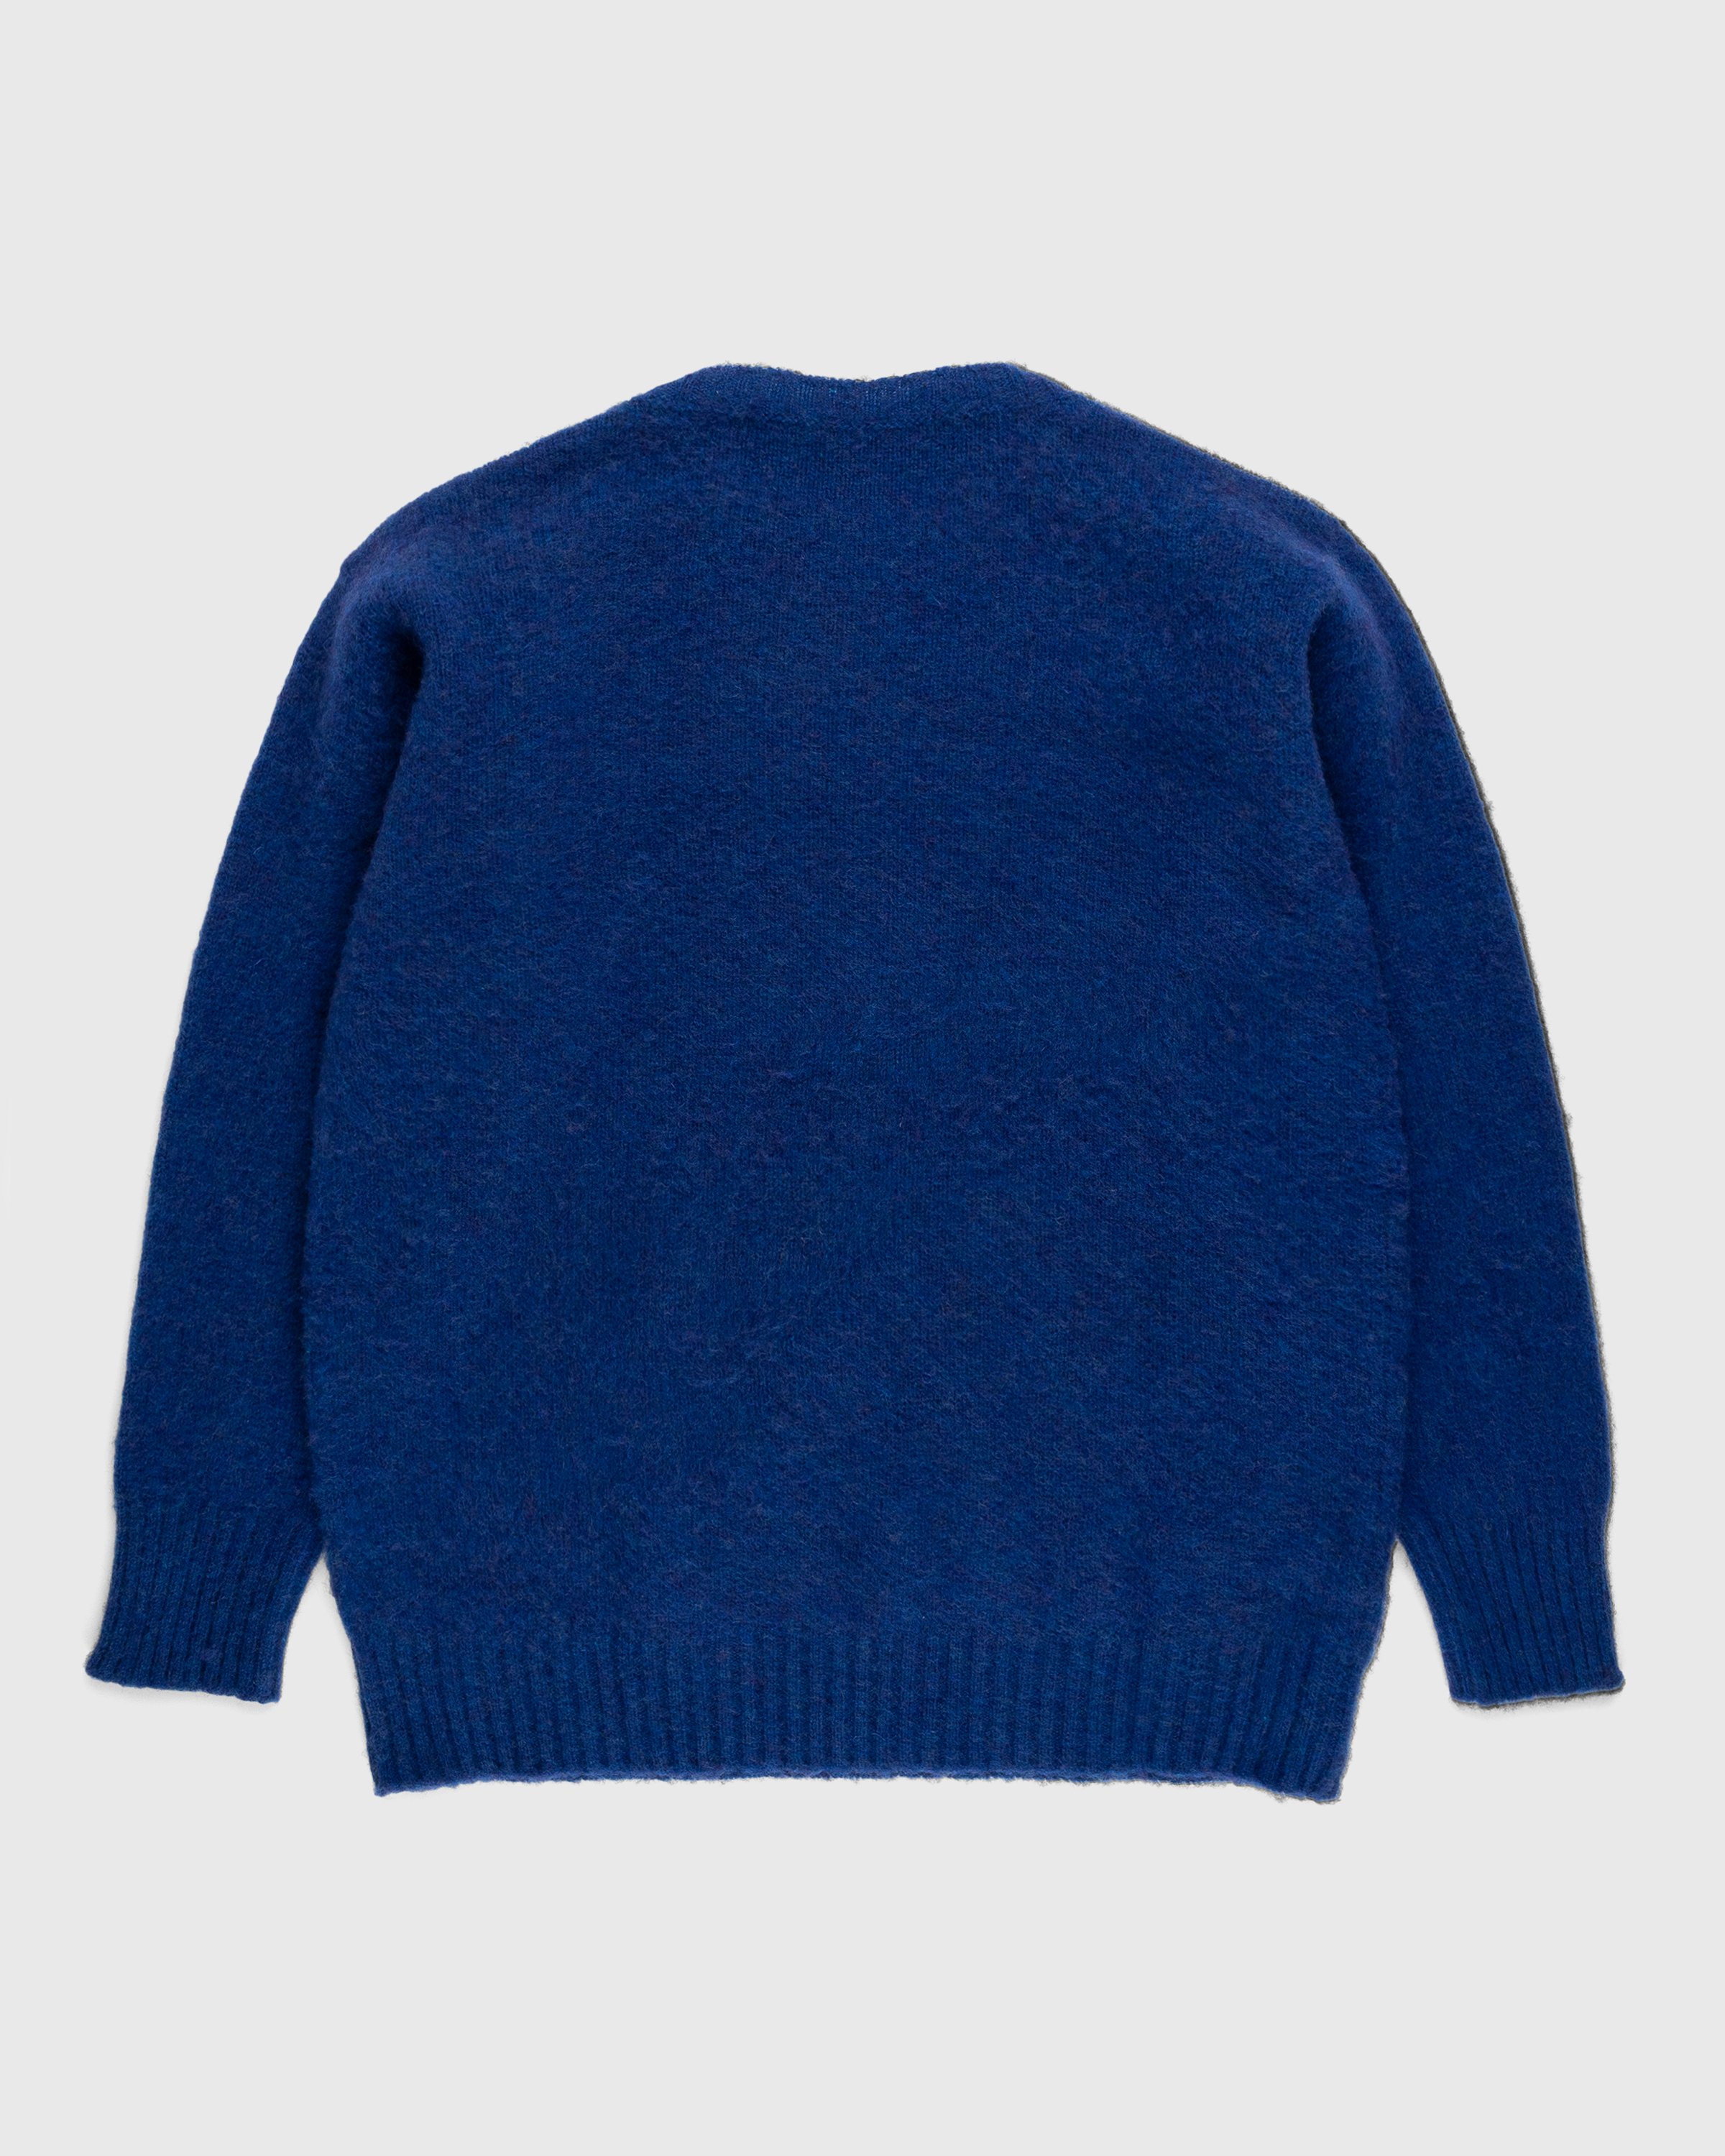 J. Press x Highsnobiety - Shaggy Dog Solid Sweater Blue - Clothing - Blue - Image 2